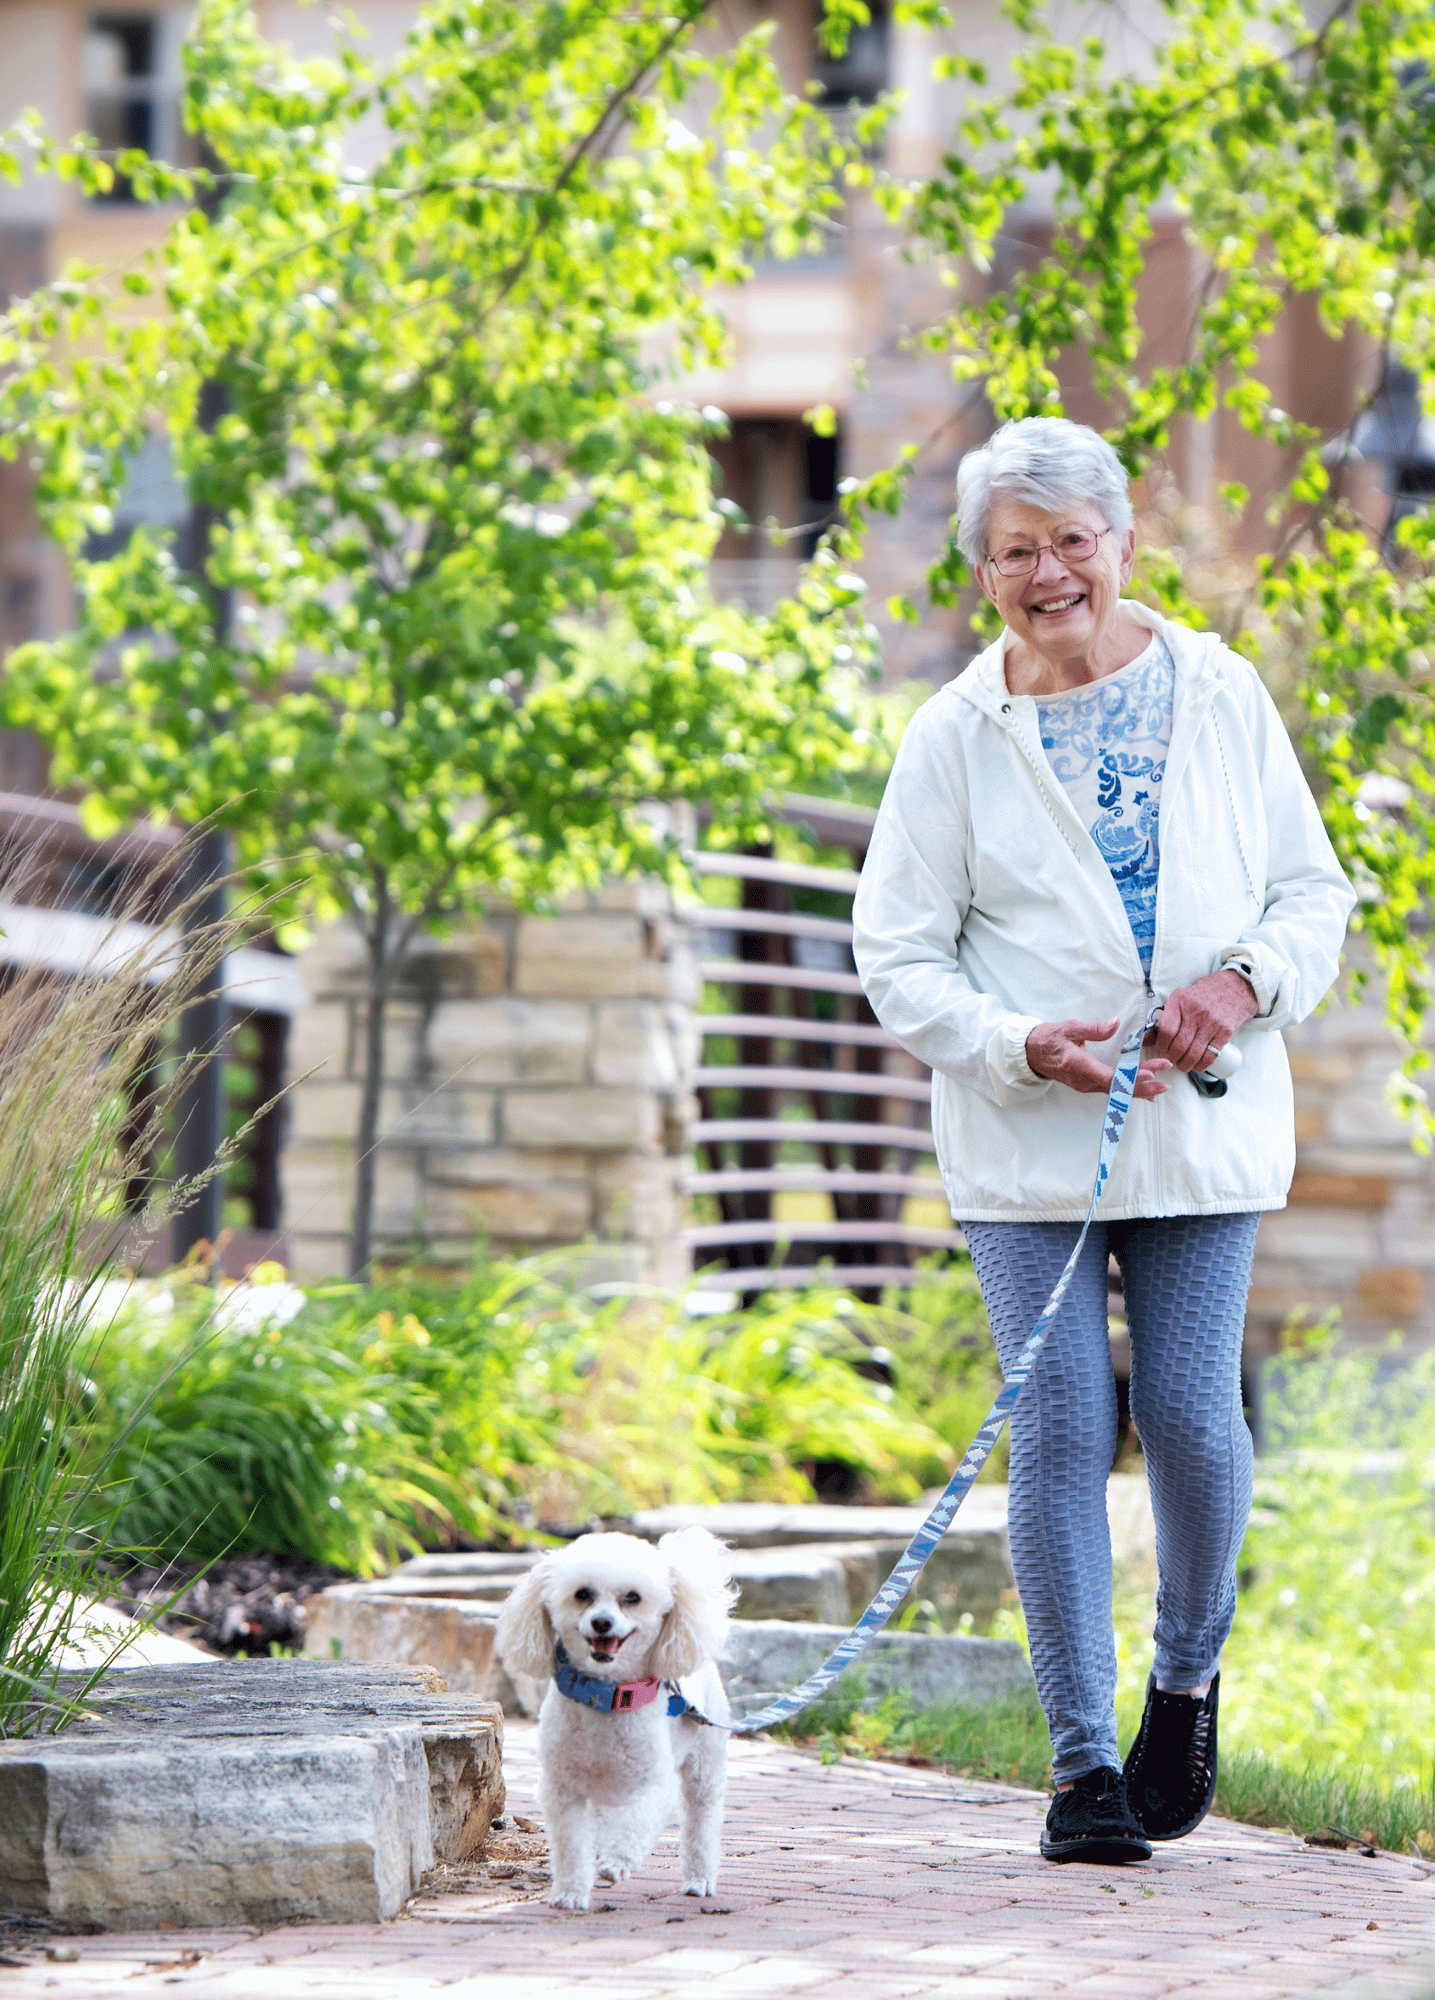 Senior woman outside walking a small white dog on a leash